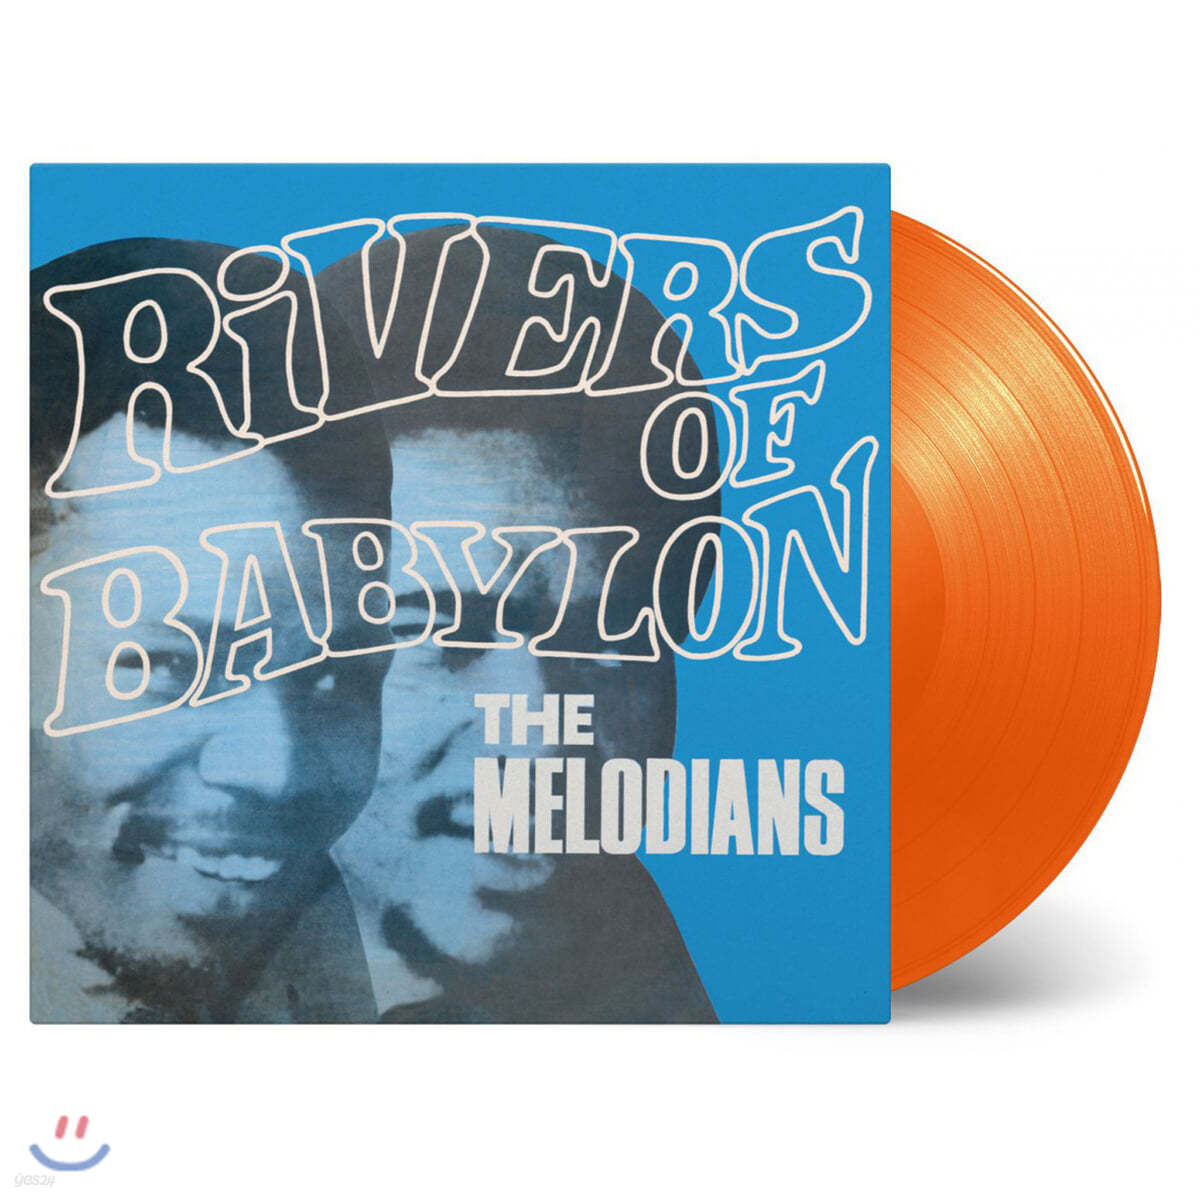 The Melodians (멜로디언) - Rivers Of Babylon [오렌지 컬러 LP]